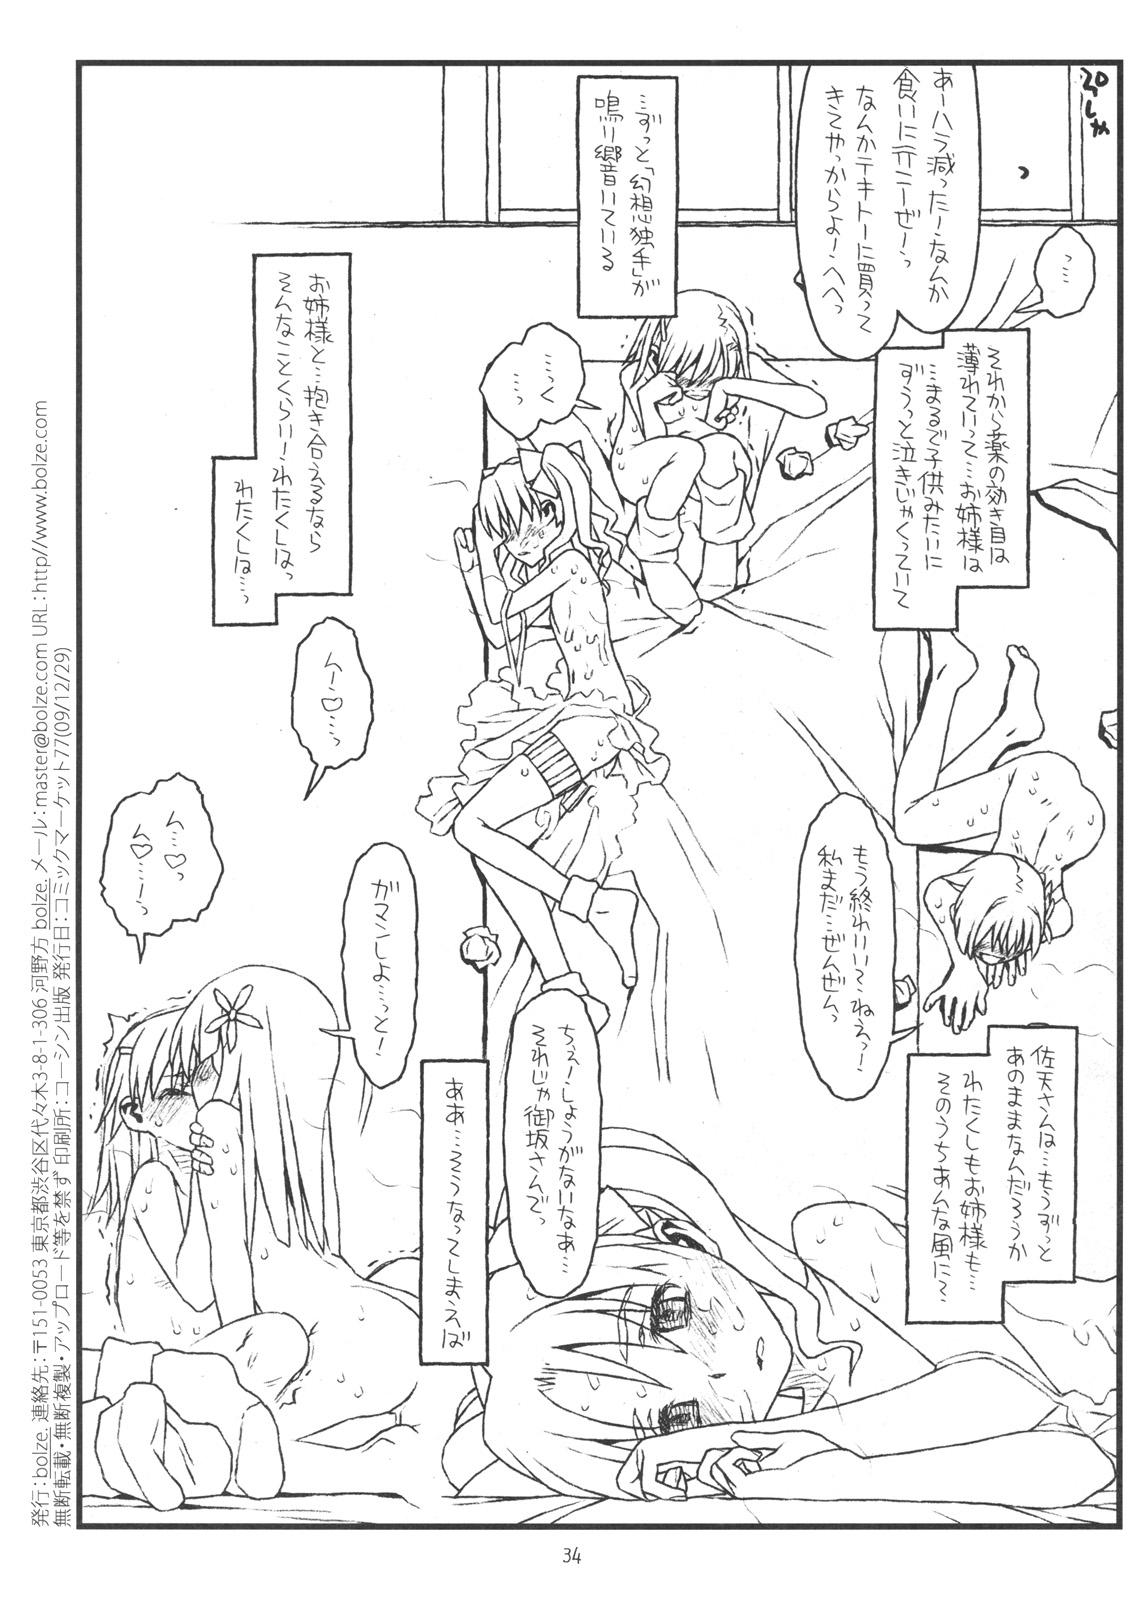 Titten HAPPINESS IS A RAILGUN - Toaru kagaku no railgun Toilet - Page 33